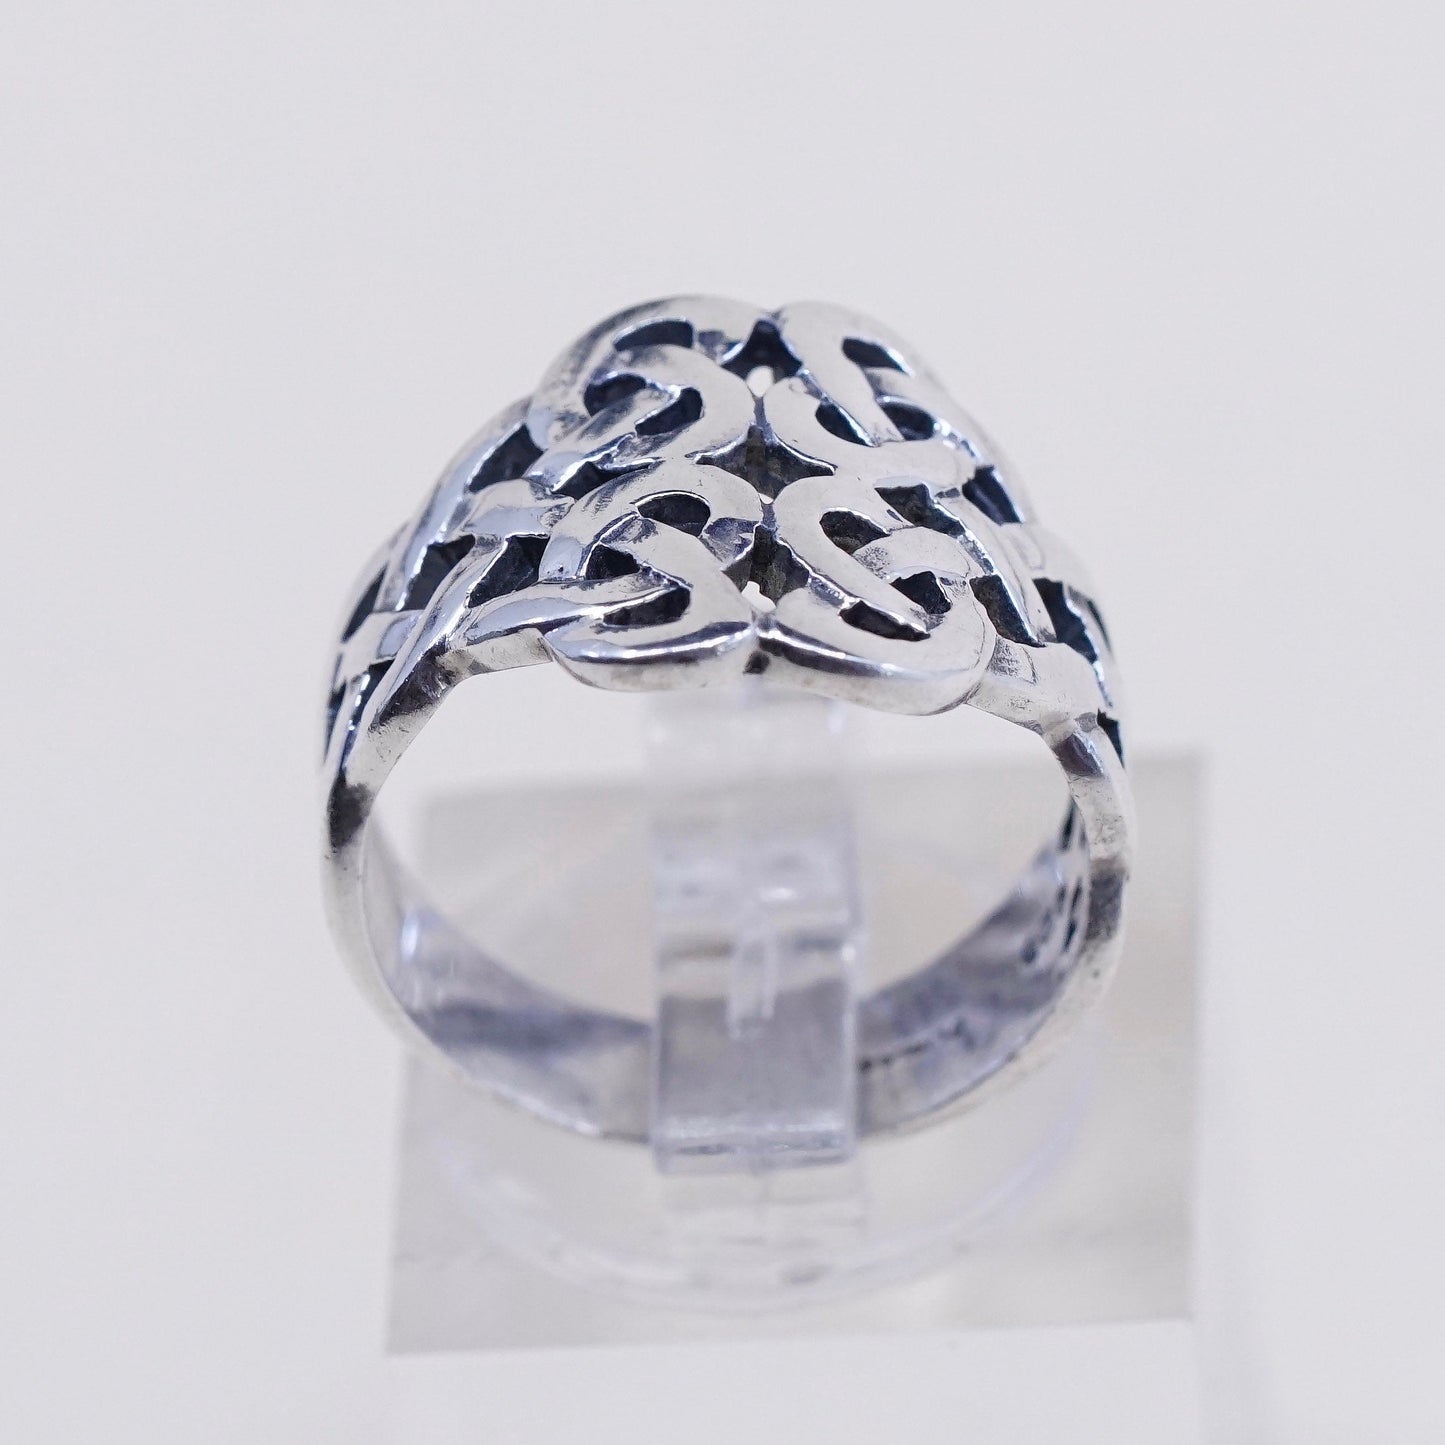 Size 6, vtg BOMA Sterling 925 silver handmade irish woven braided ring, band